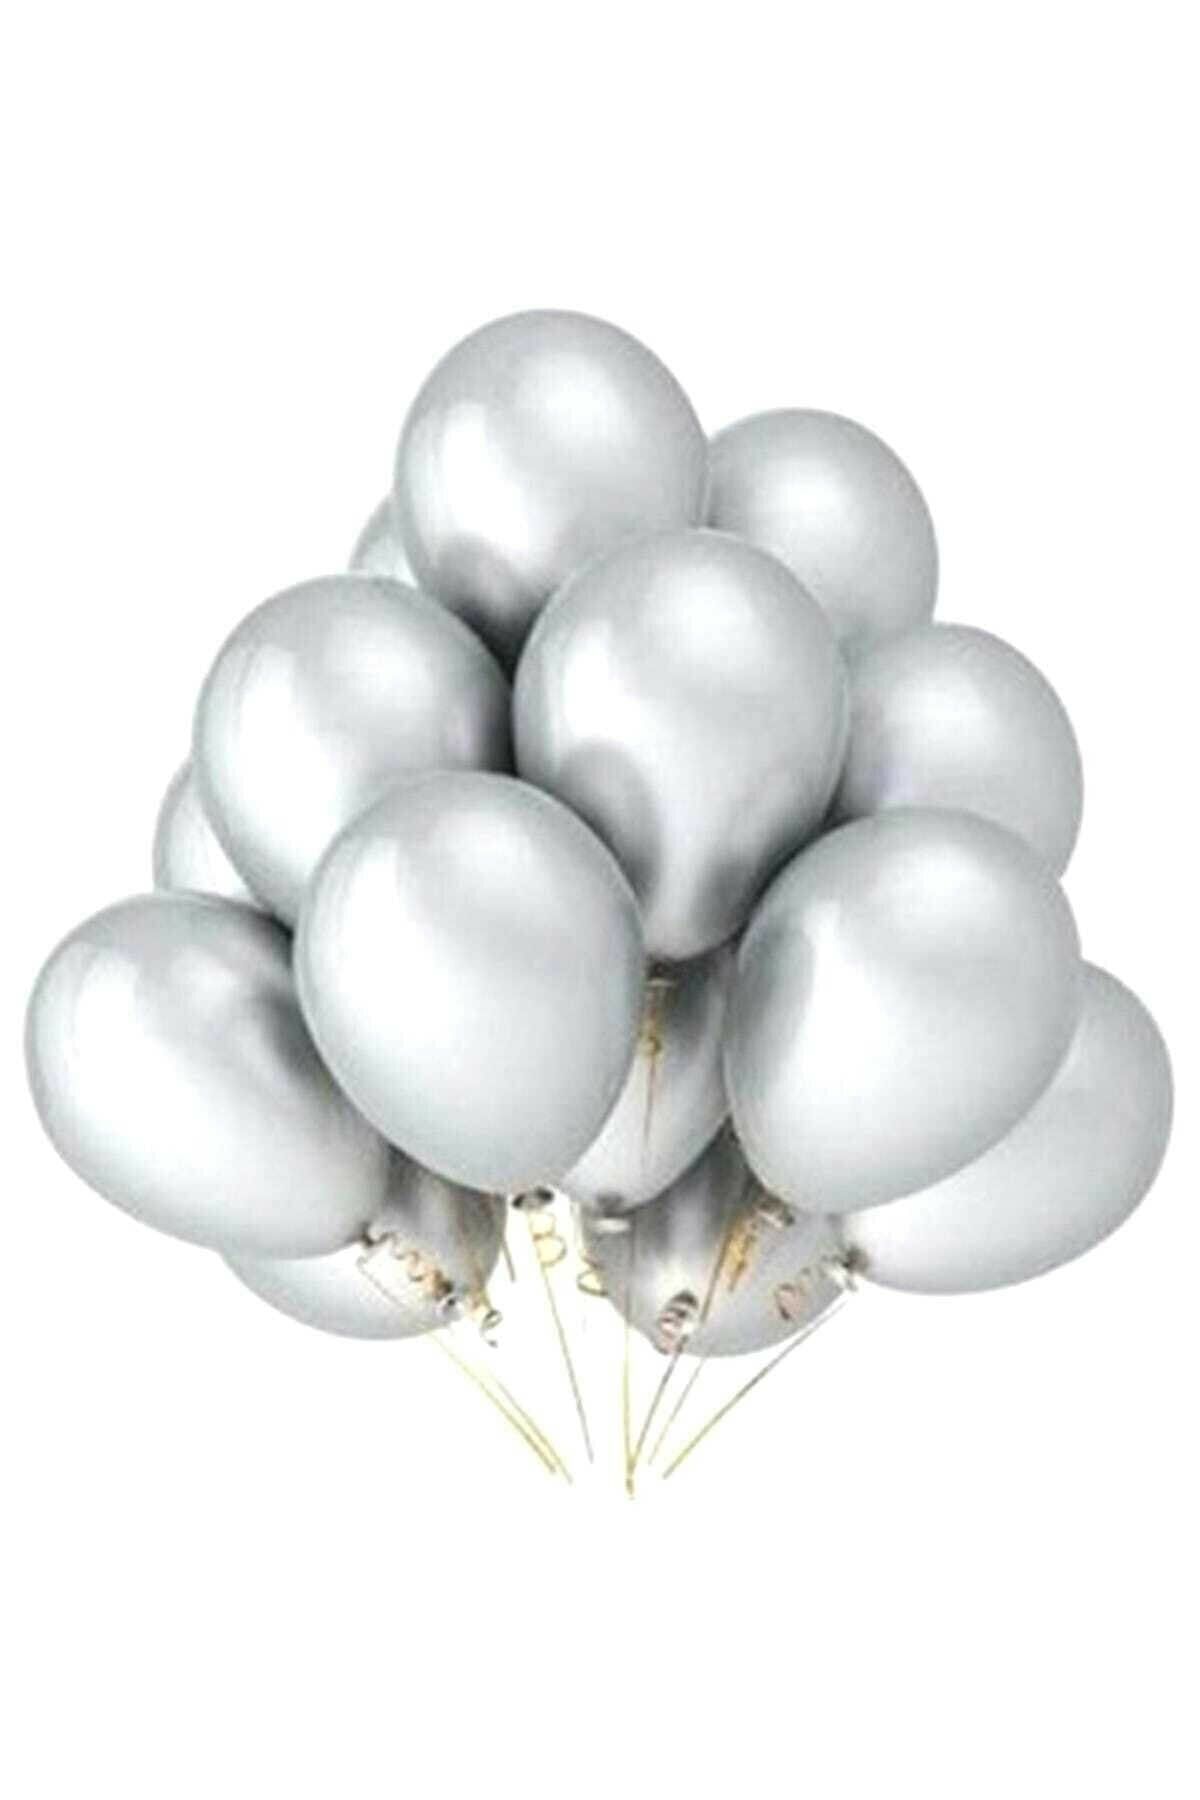 Hyd  Metalik Silver (gümüş) Balon 10 Adet Helyumla Uçan